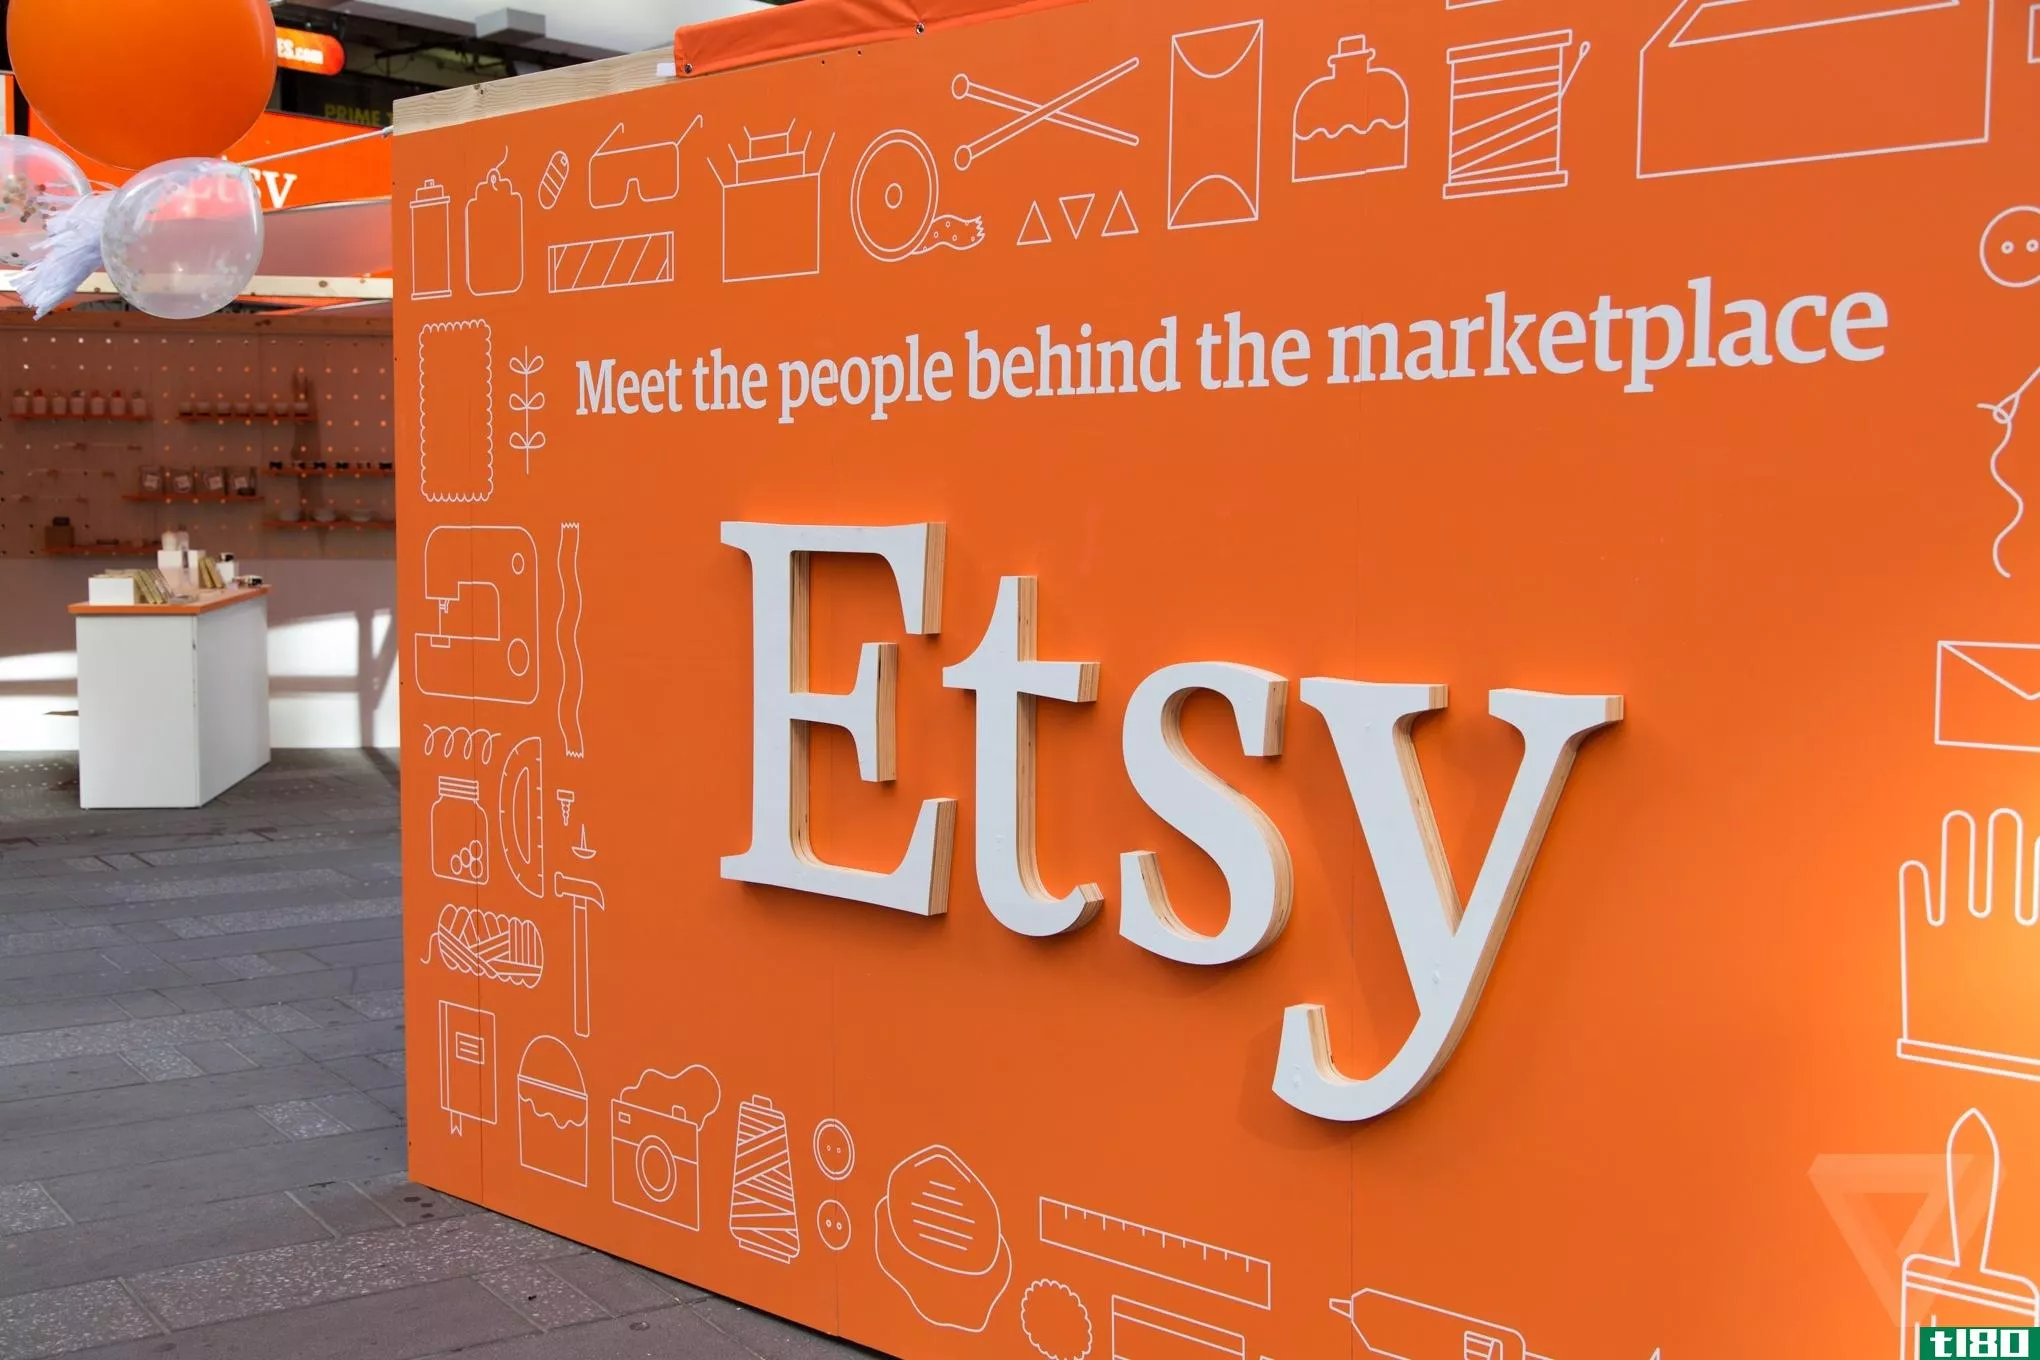 etsy现在将帮助设计师找到制造商